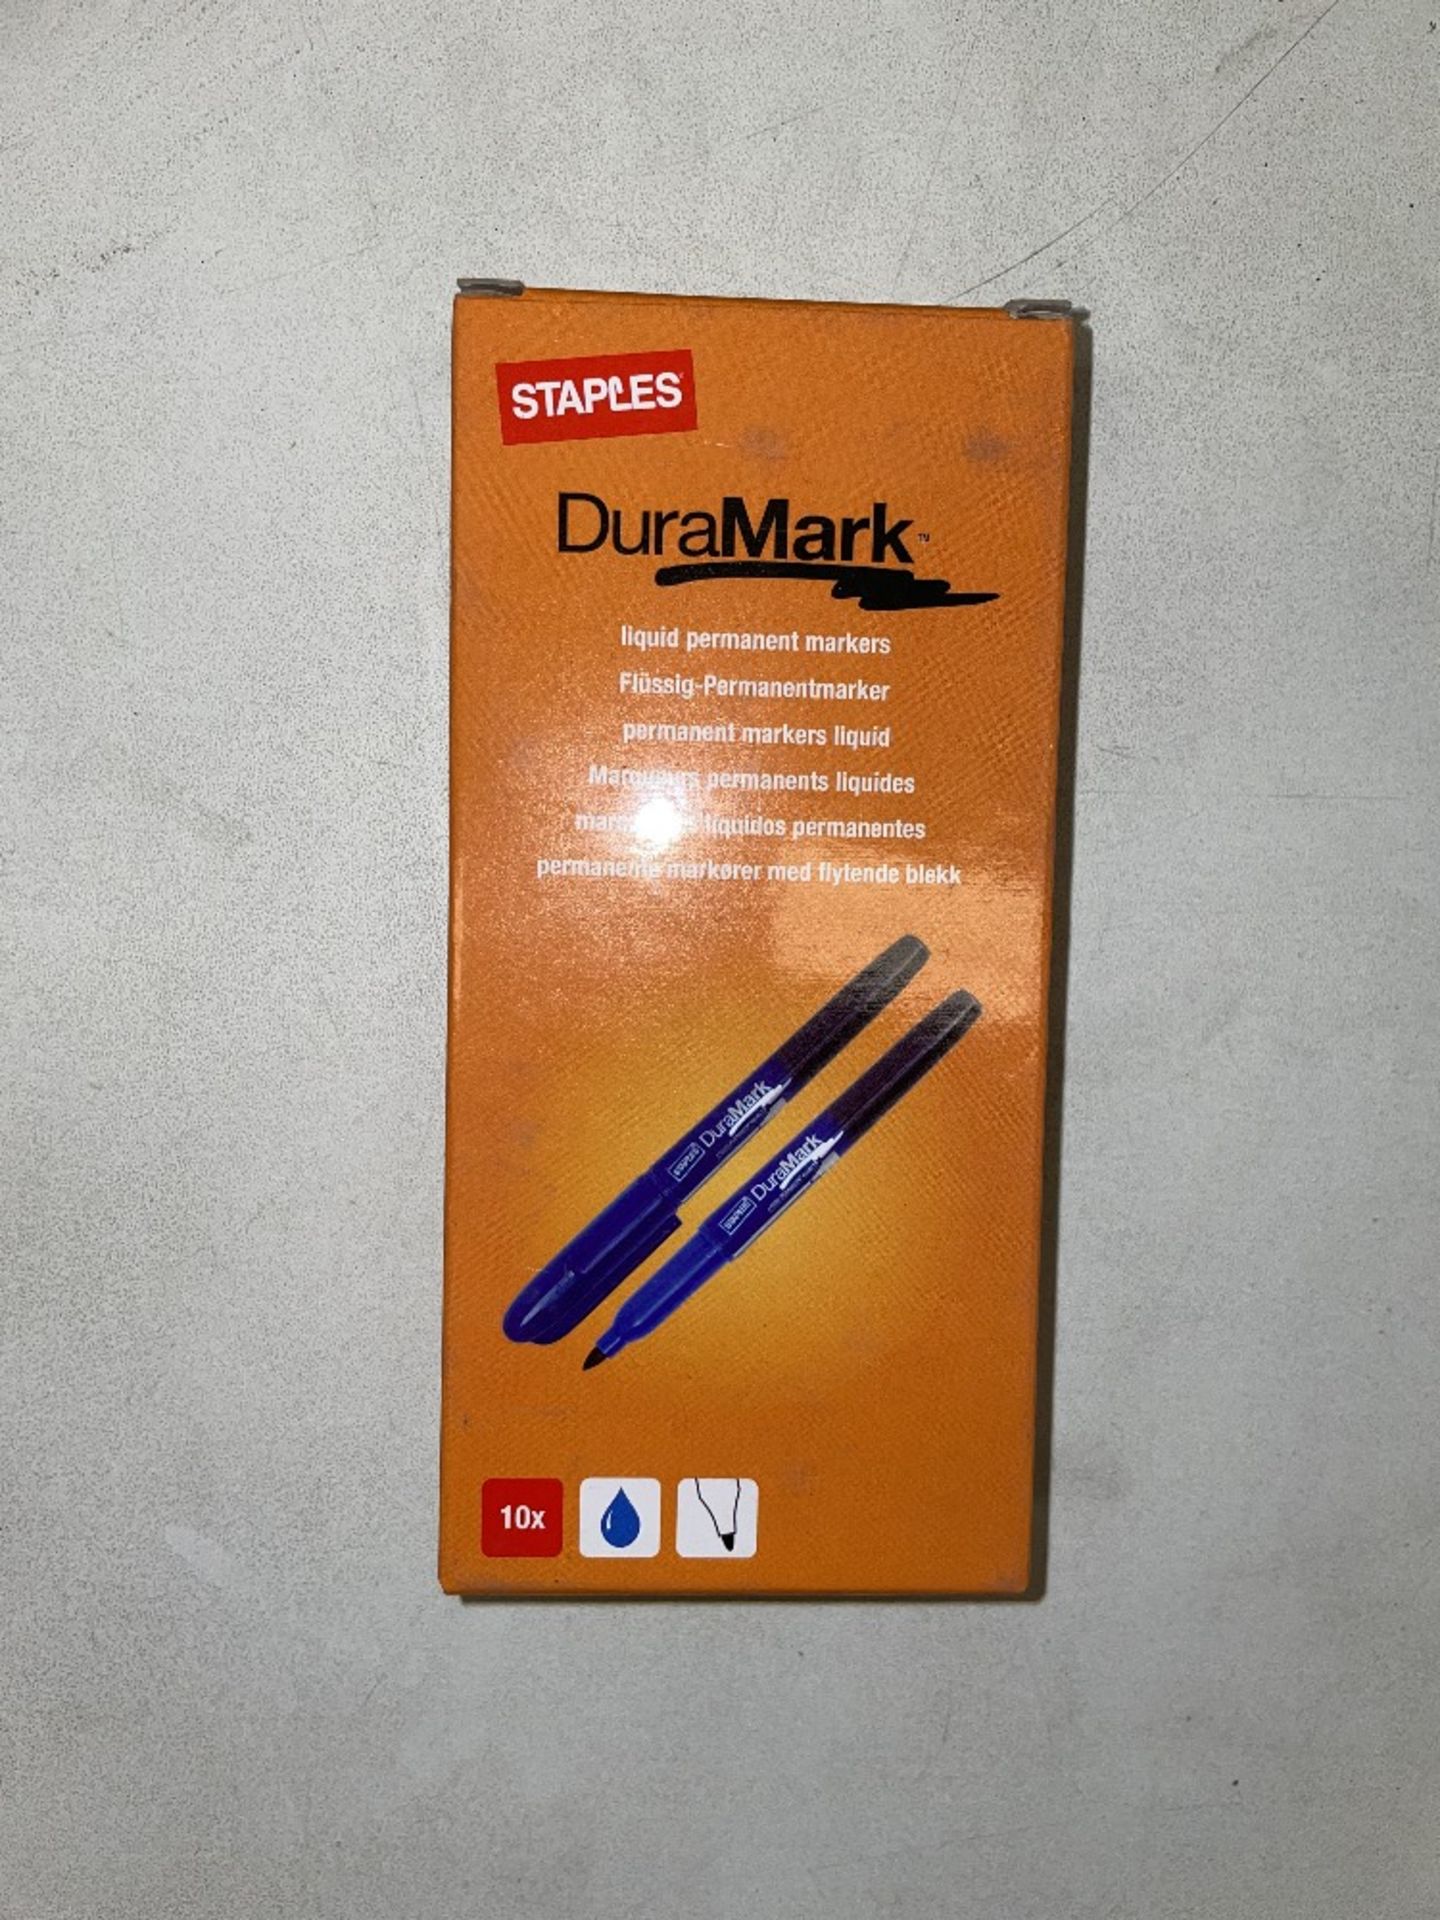 Approximately 4,800 x Staples 50650 DuraMark Liquid Permanent Markers